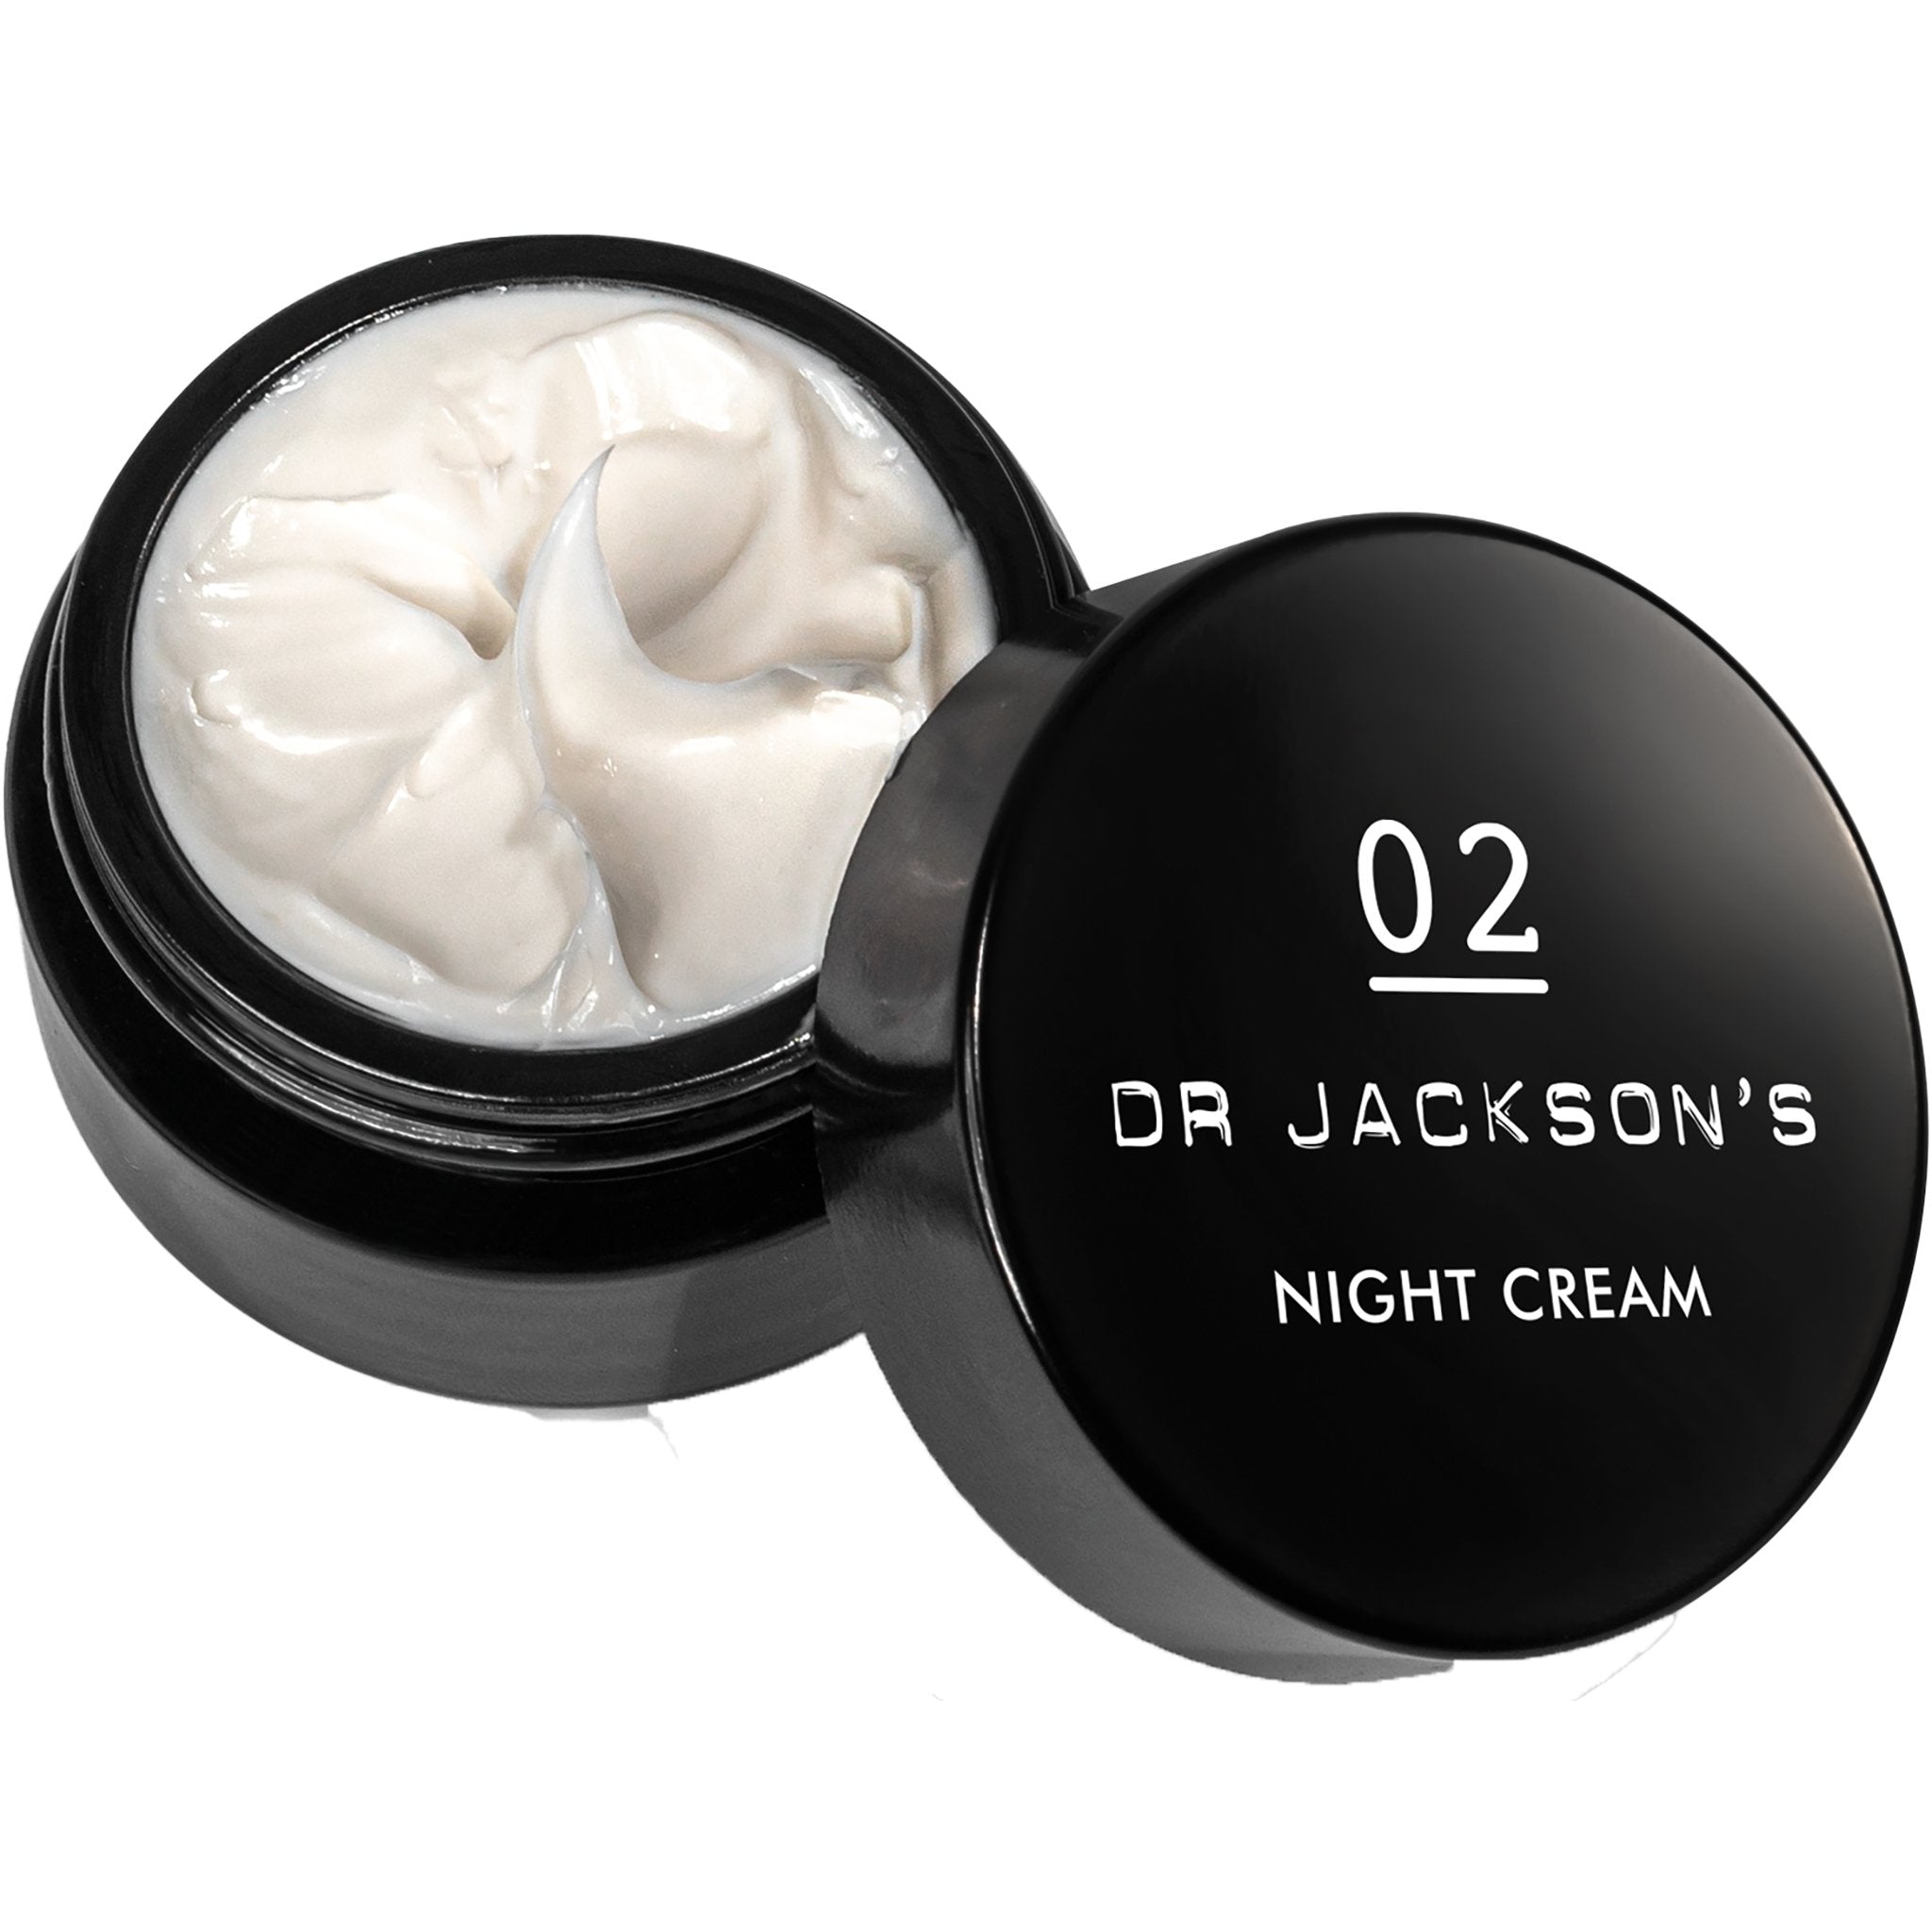 02 Night Cream - mypure.co.uk